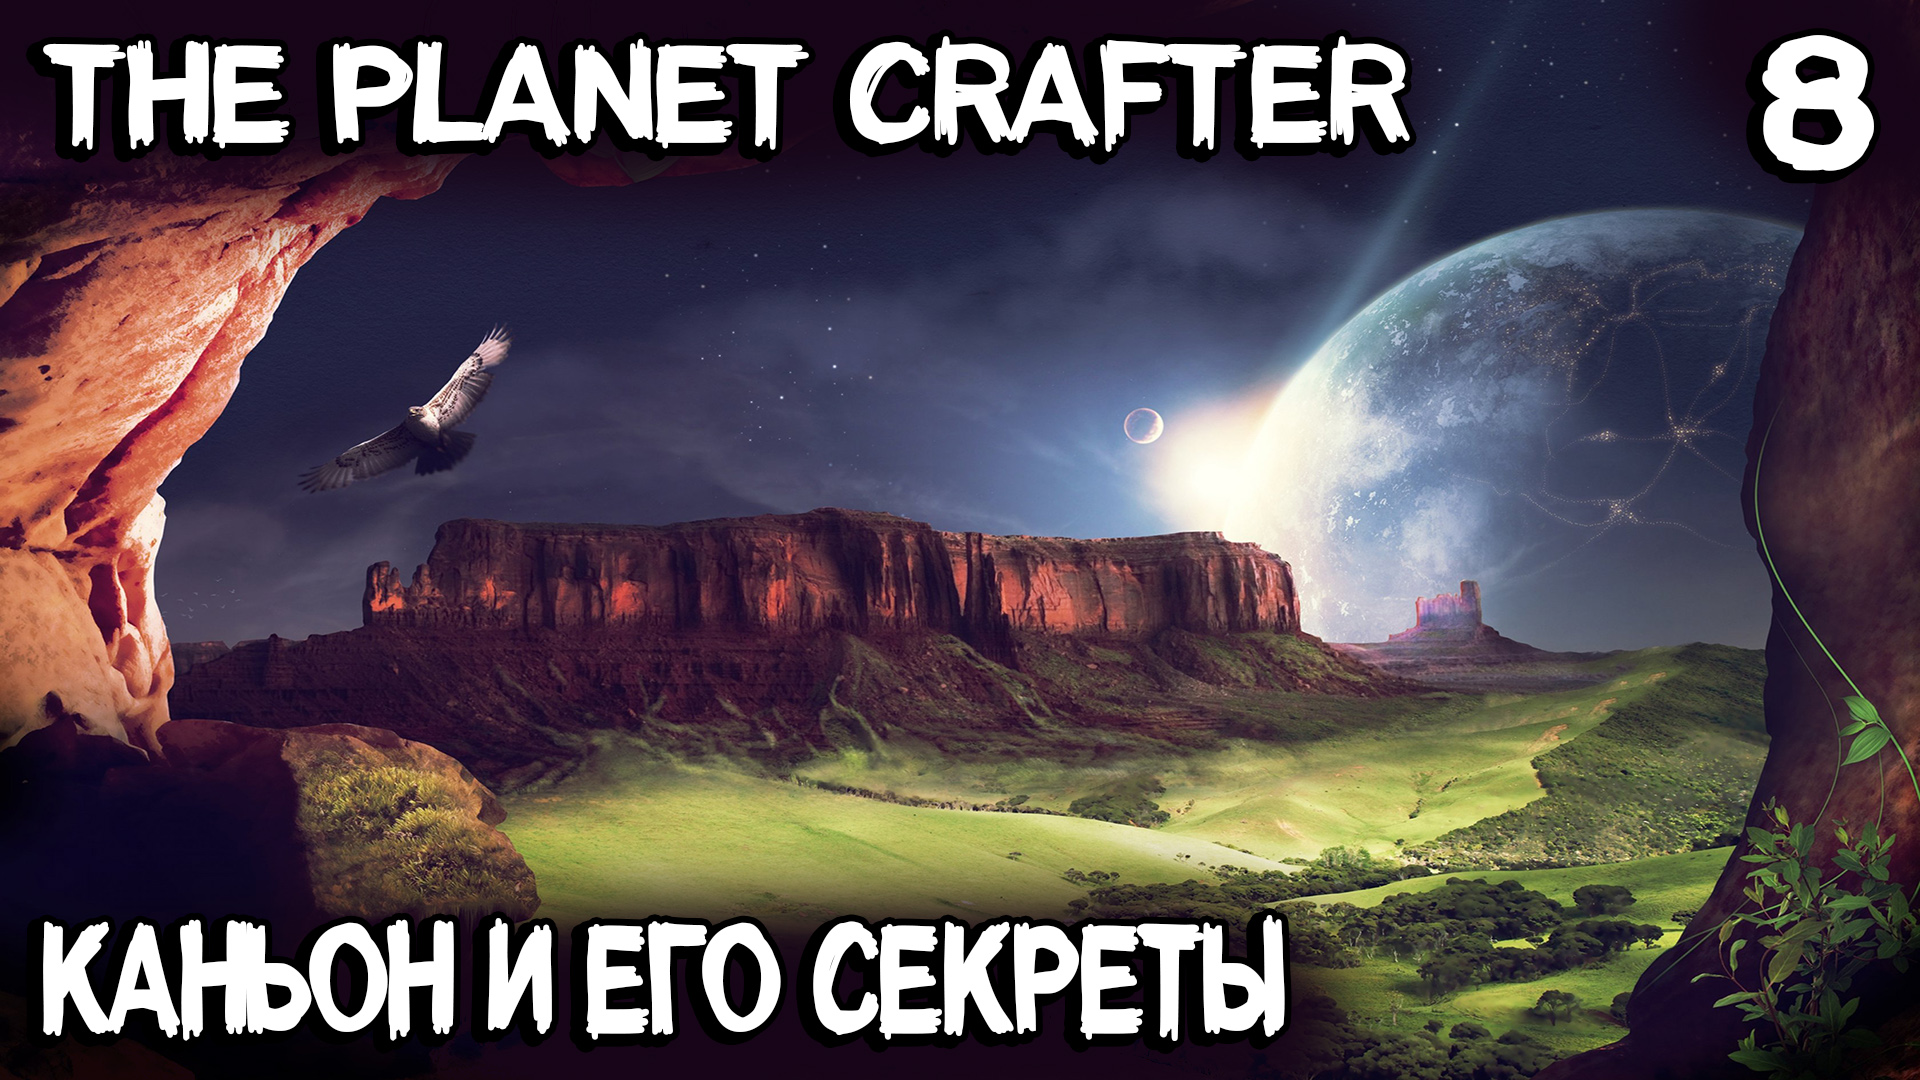 The Planet Crafter - крафтим метановый картридж, пульсирующий кварц, мутаген и посещение каньона #8